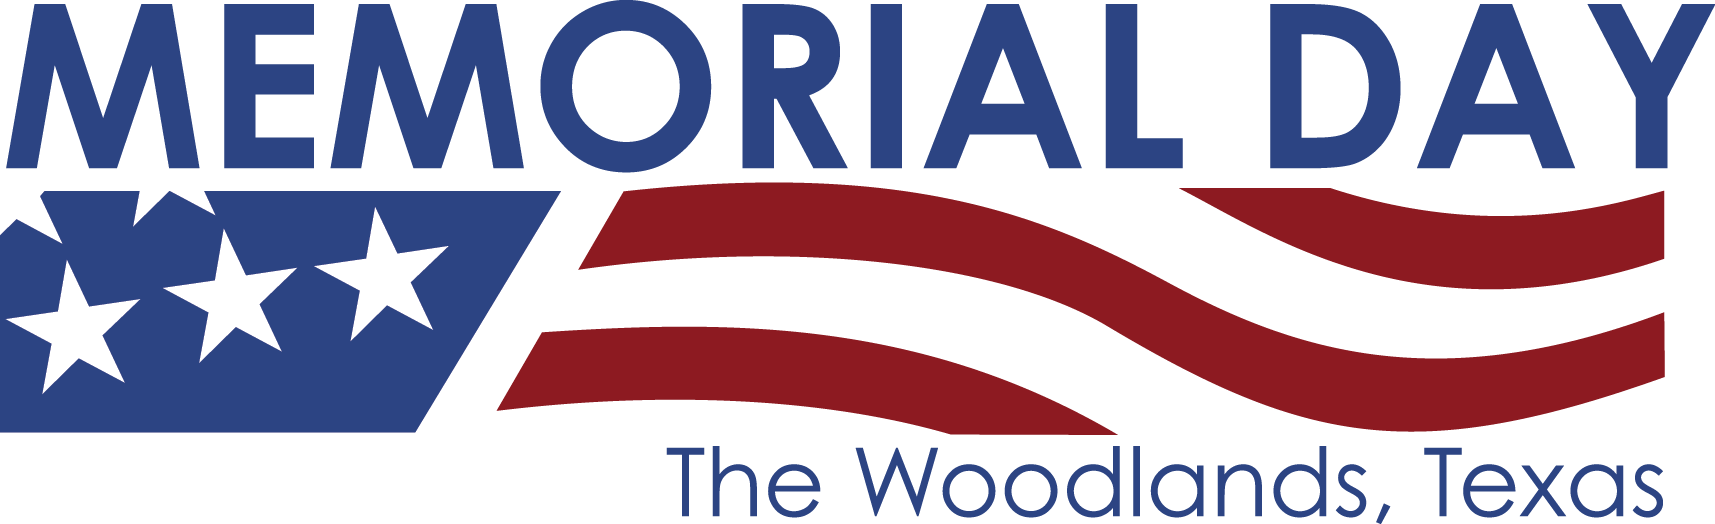 Memorial Logo - The Woodlands Township, TX